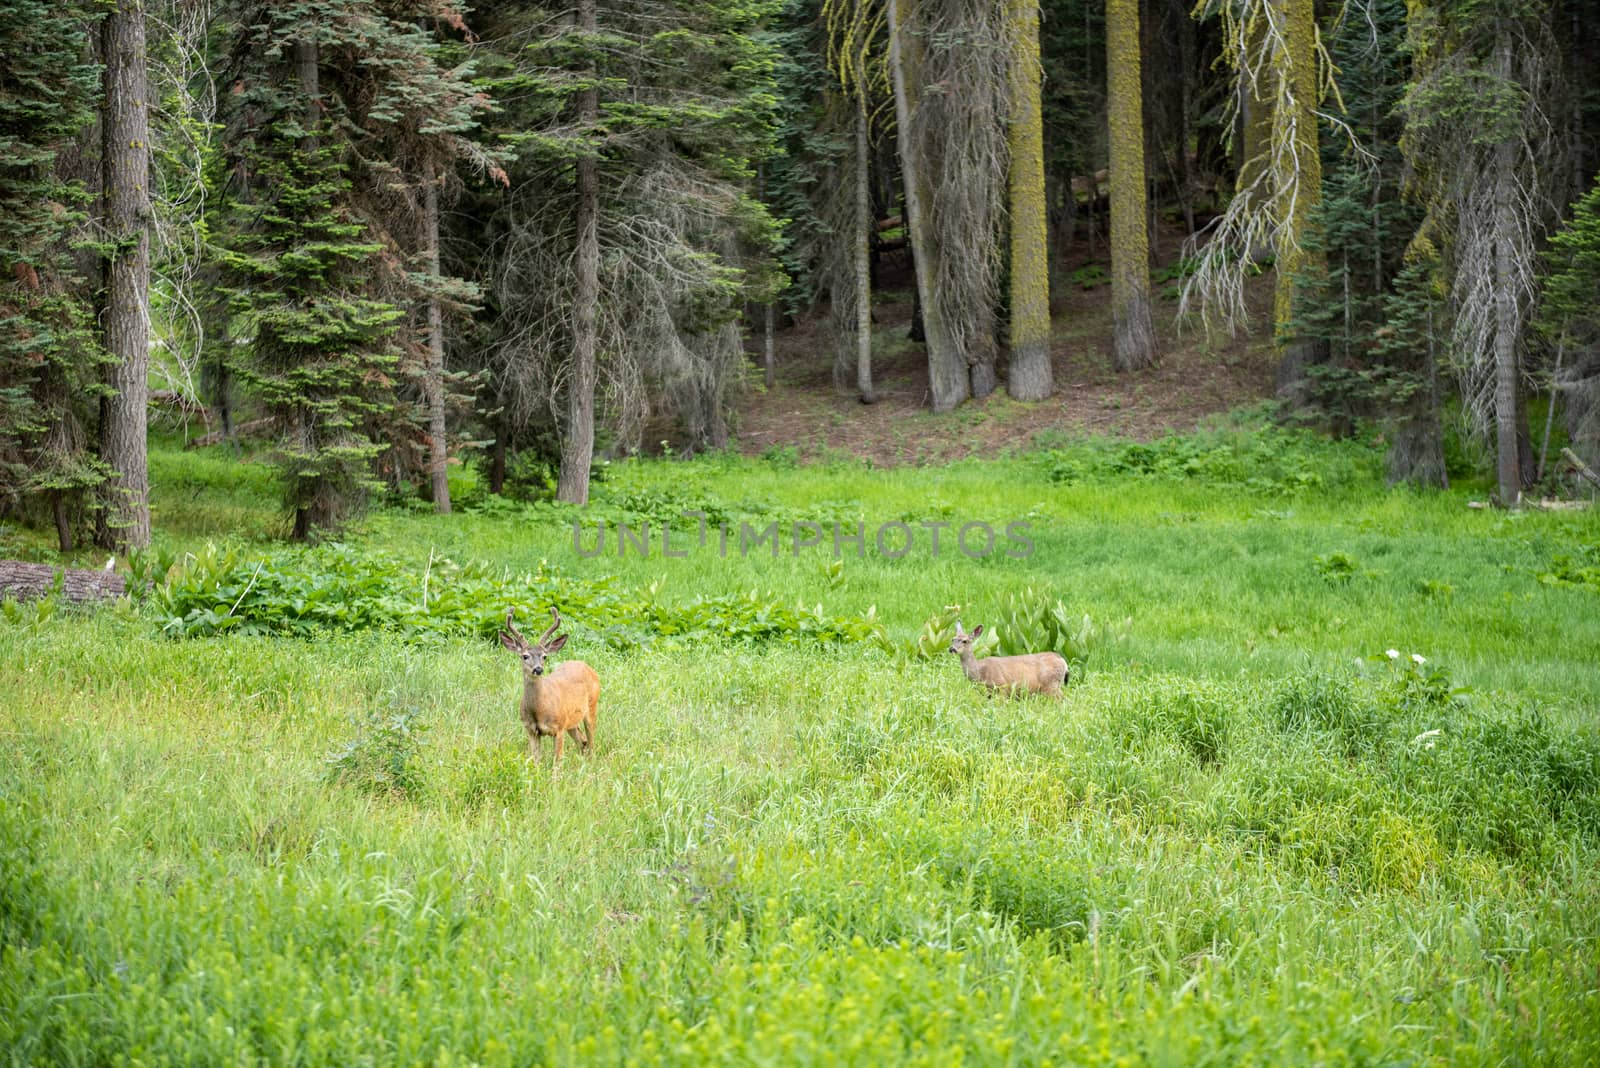 Deer in a meadow in Sequoia National Park, California by Njean